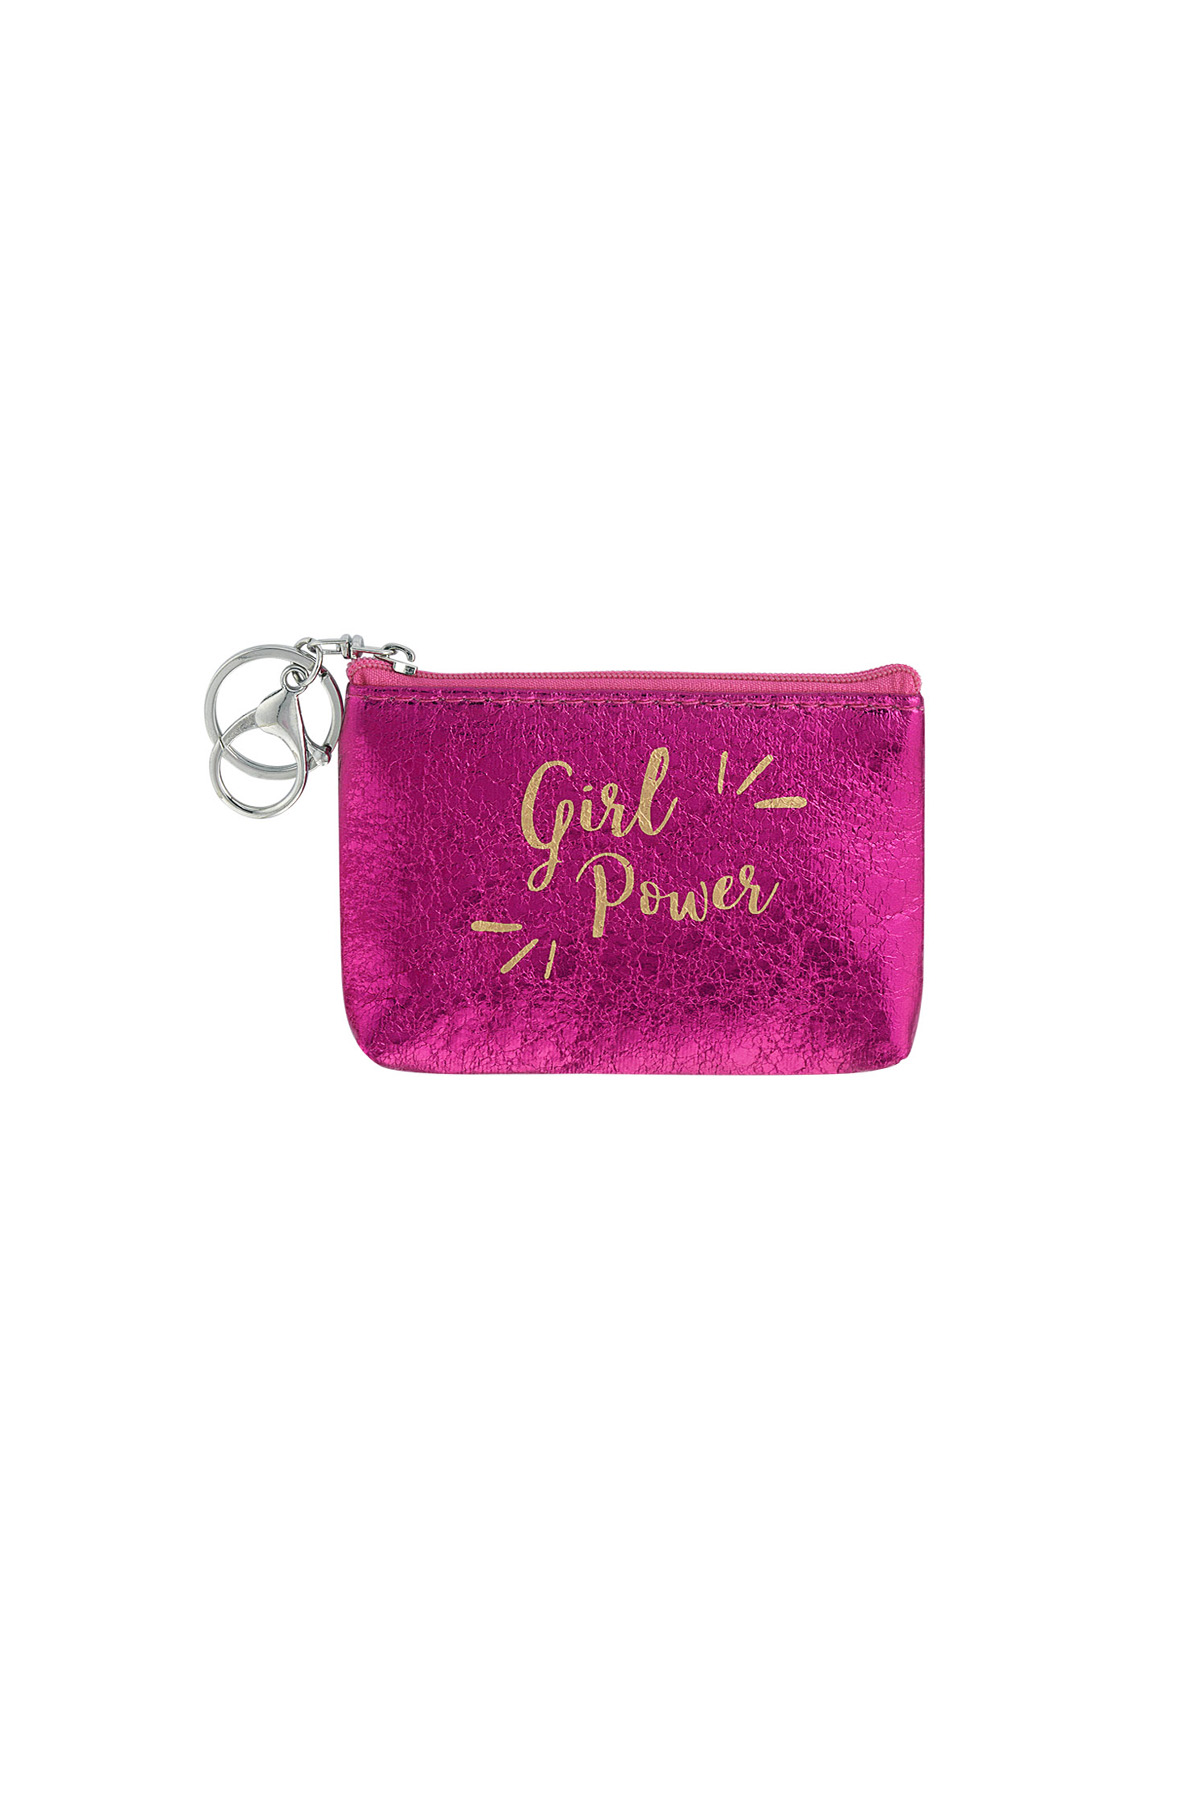 Keychain wallet metallic girl power - fuchsia